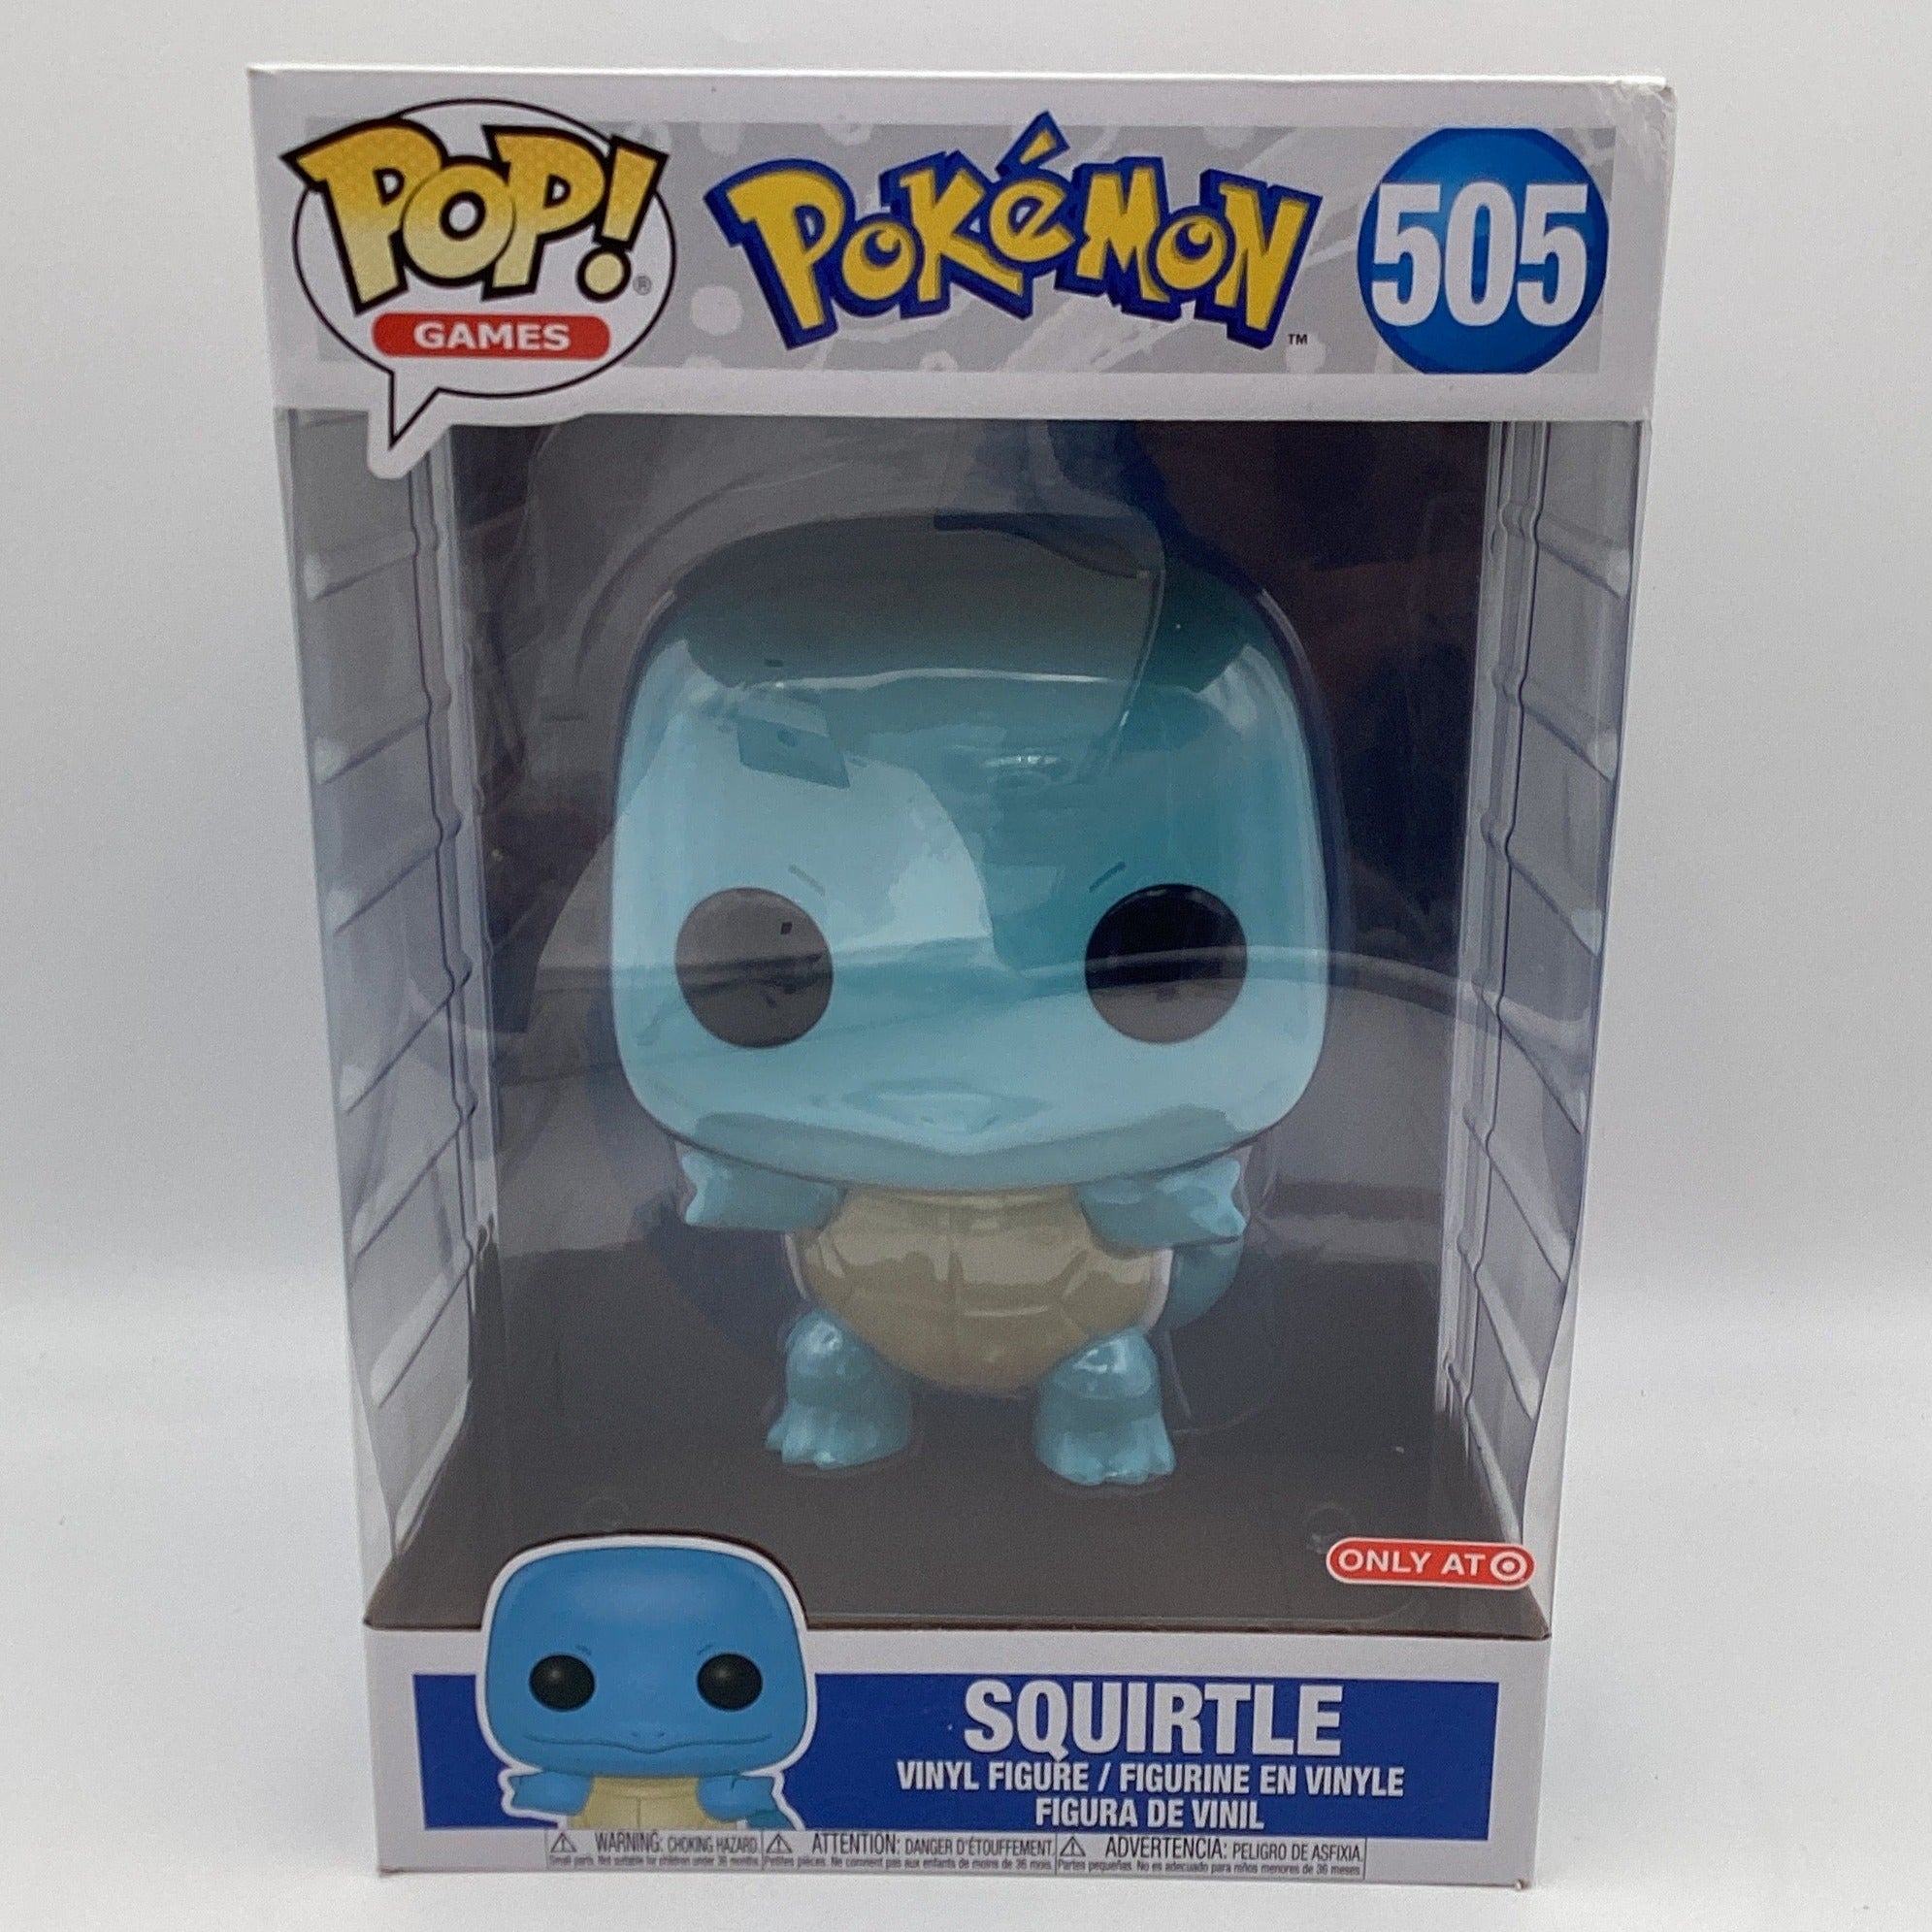 Pokémon Squirtle Funko Pop Coming Soon